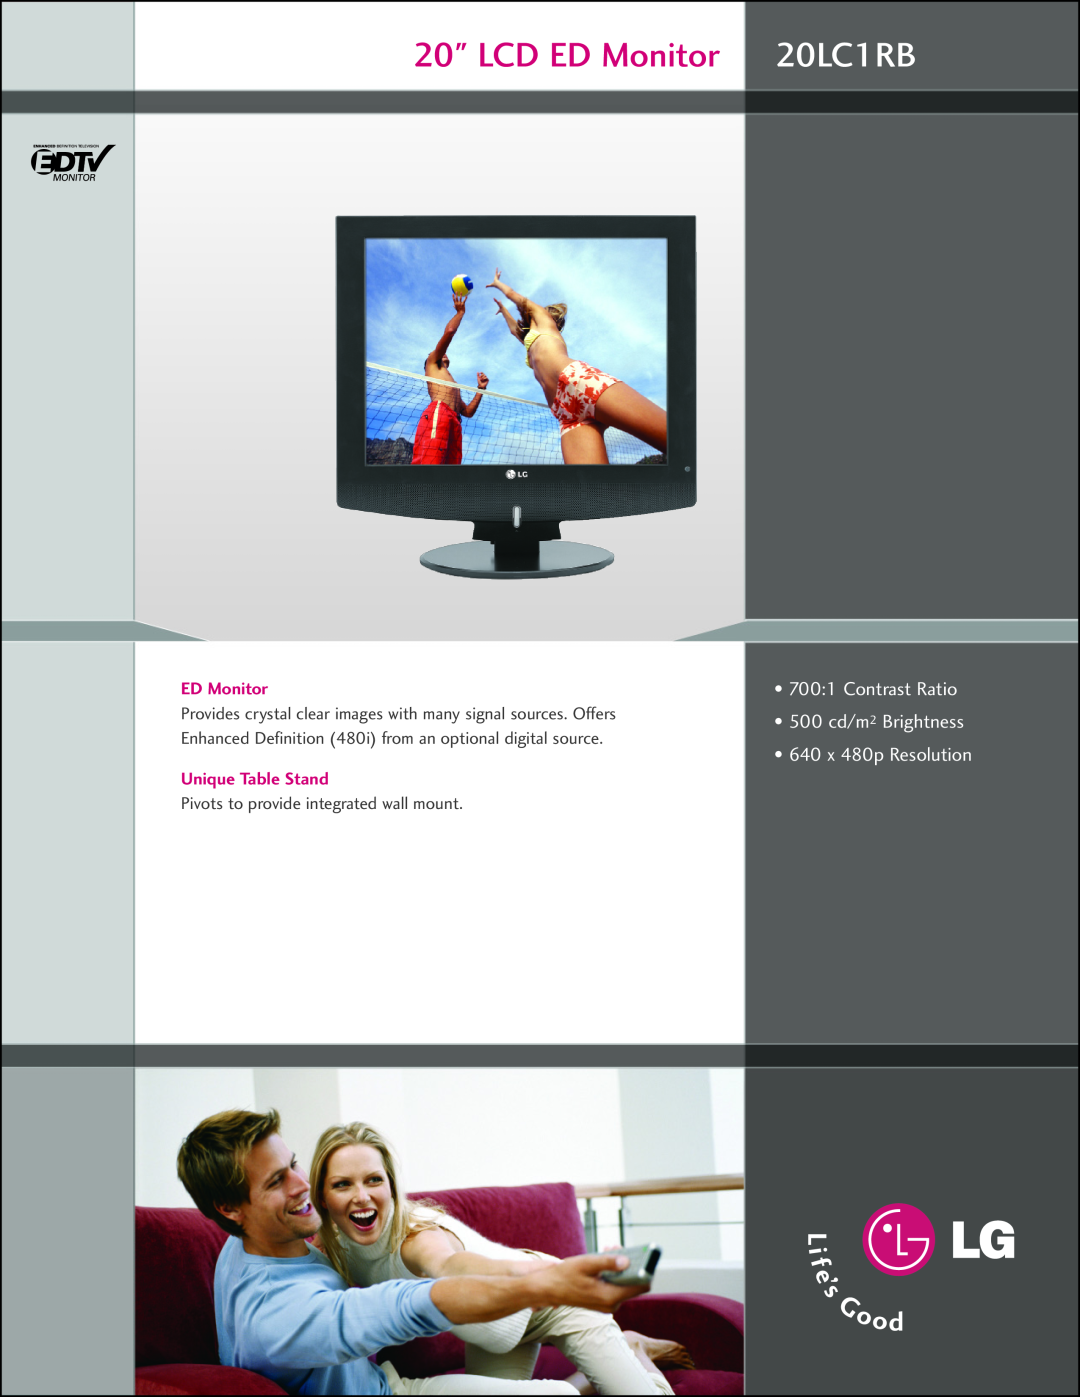 LG Electronics manual LCD ED Monitor 20LC1RB, Contrast Ratio 500 cd/m2 Brightness 640 x 480p Resolution 